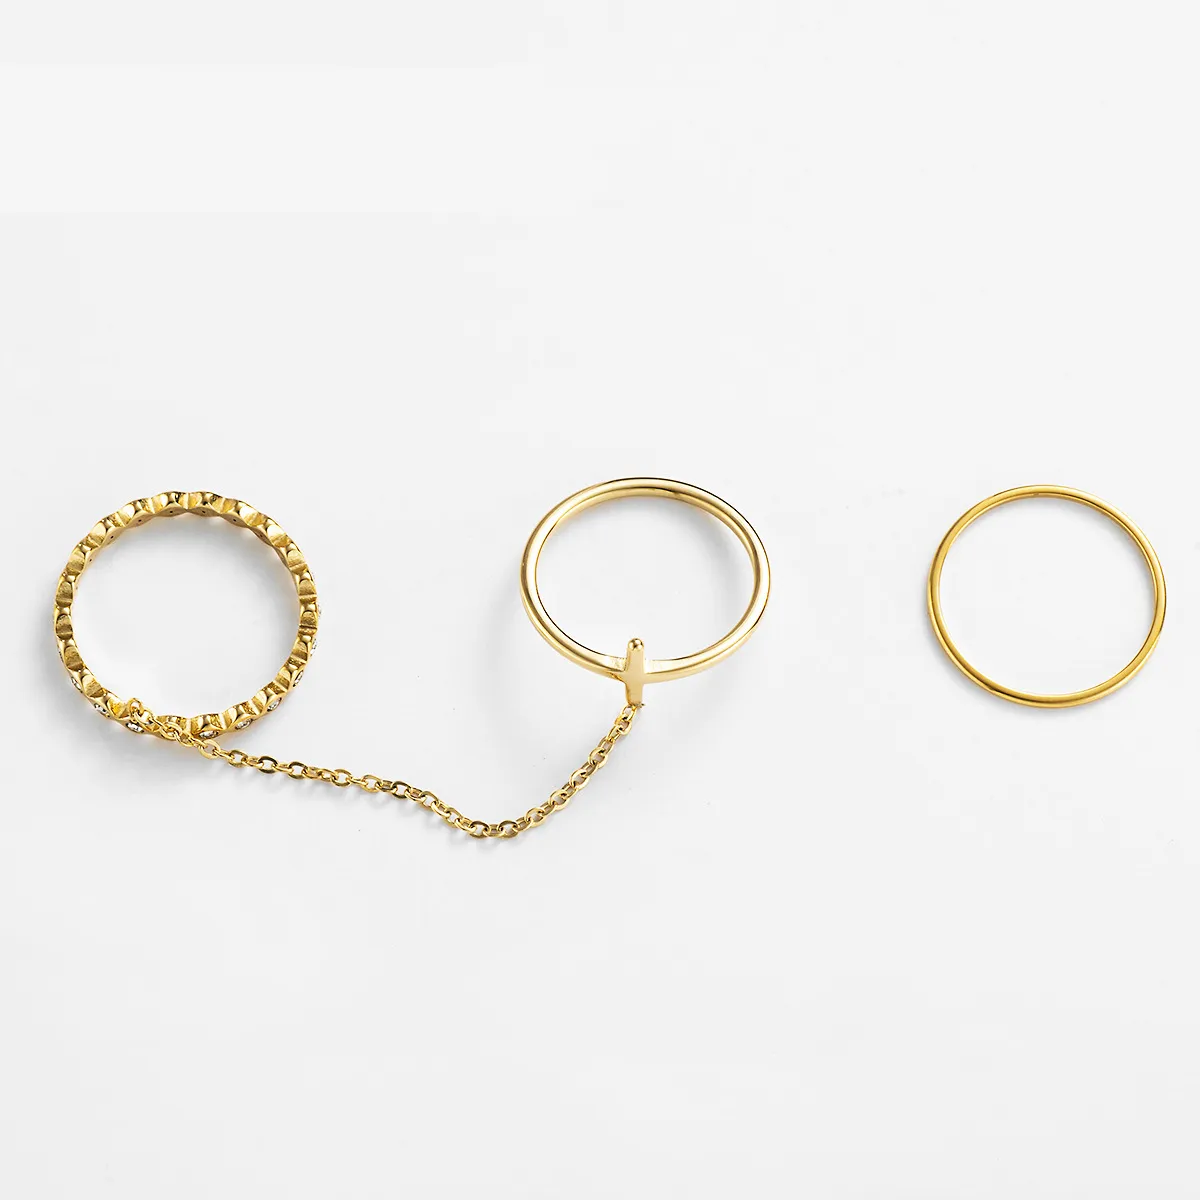 Minimalist Cross Stainless Steel Rings Set Pave Micro Zirconia Rings For Women Geometric Minimalist Fashion Jewelry